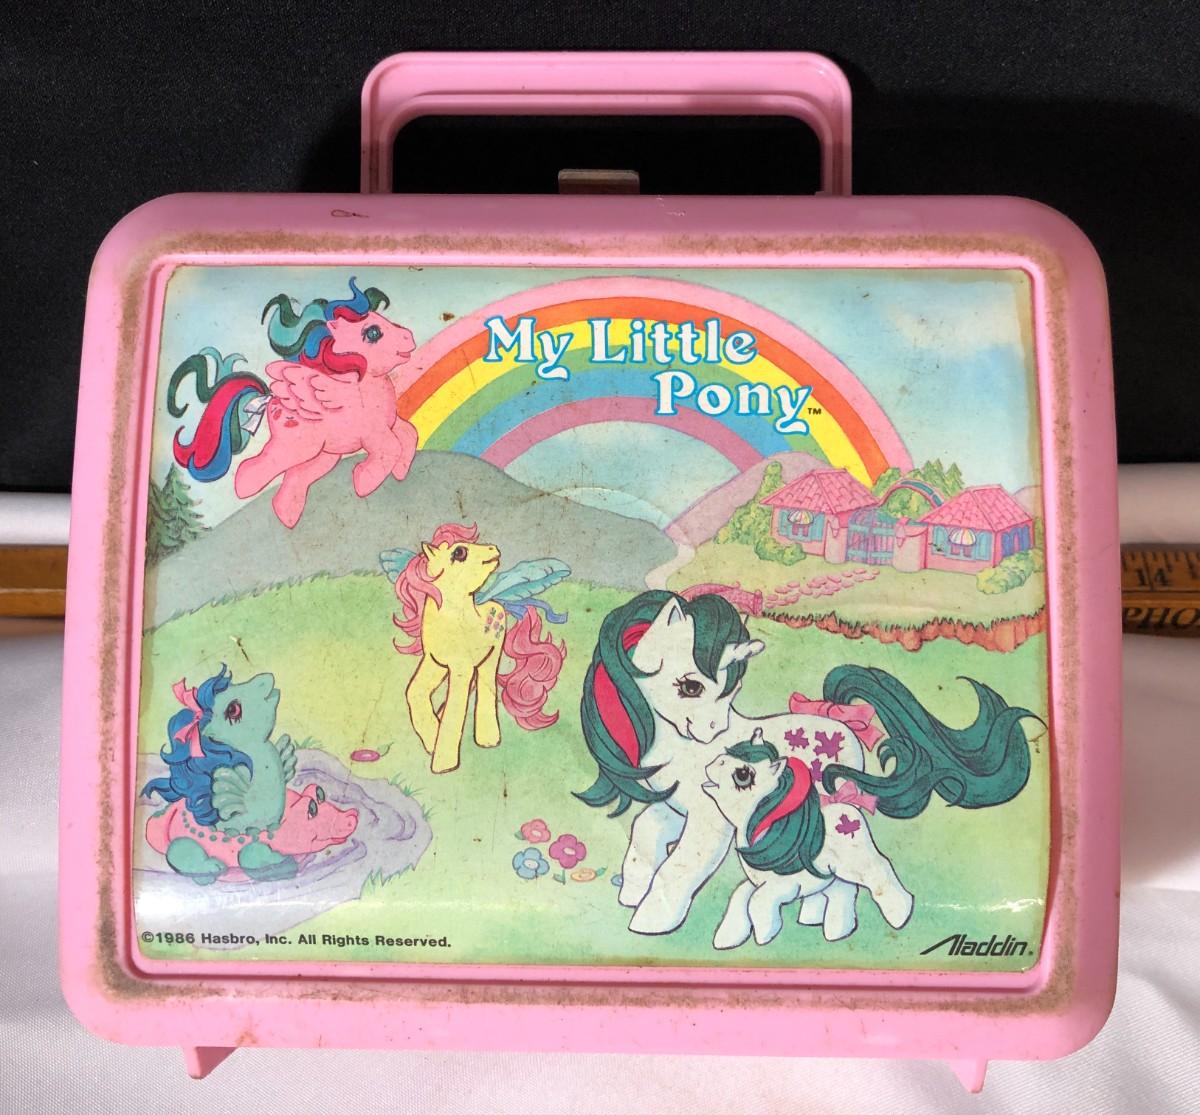 My Little Pony Lunchbox